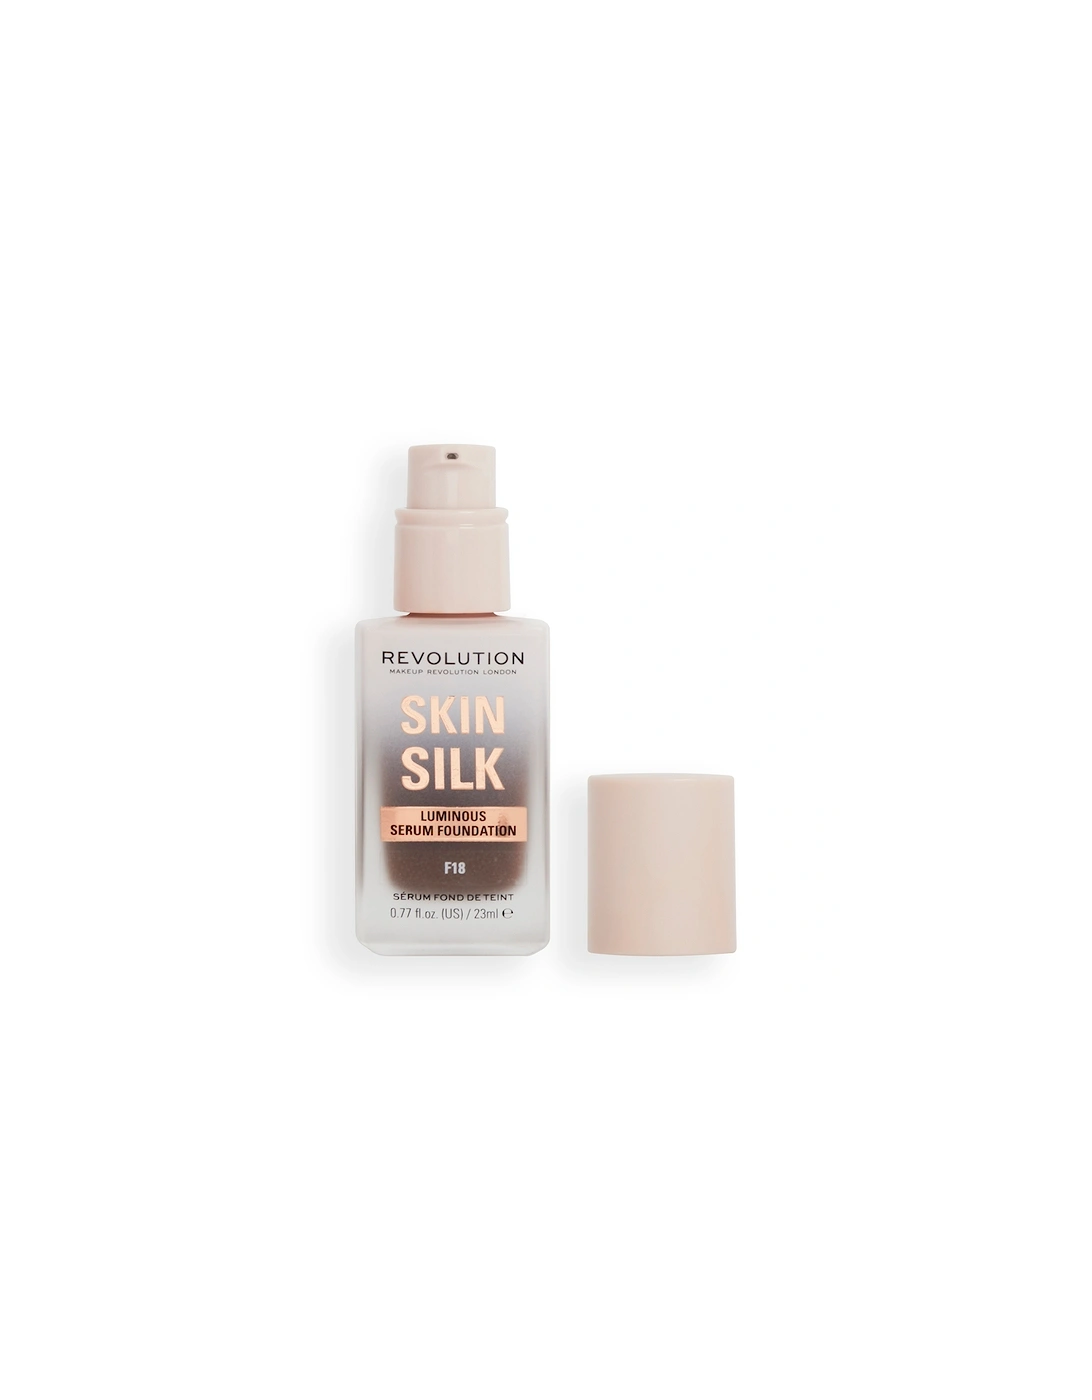 Makeup Skin Silk Serum Foundation F18, 2 of 1